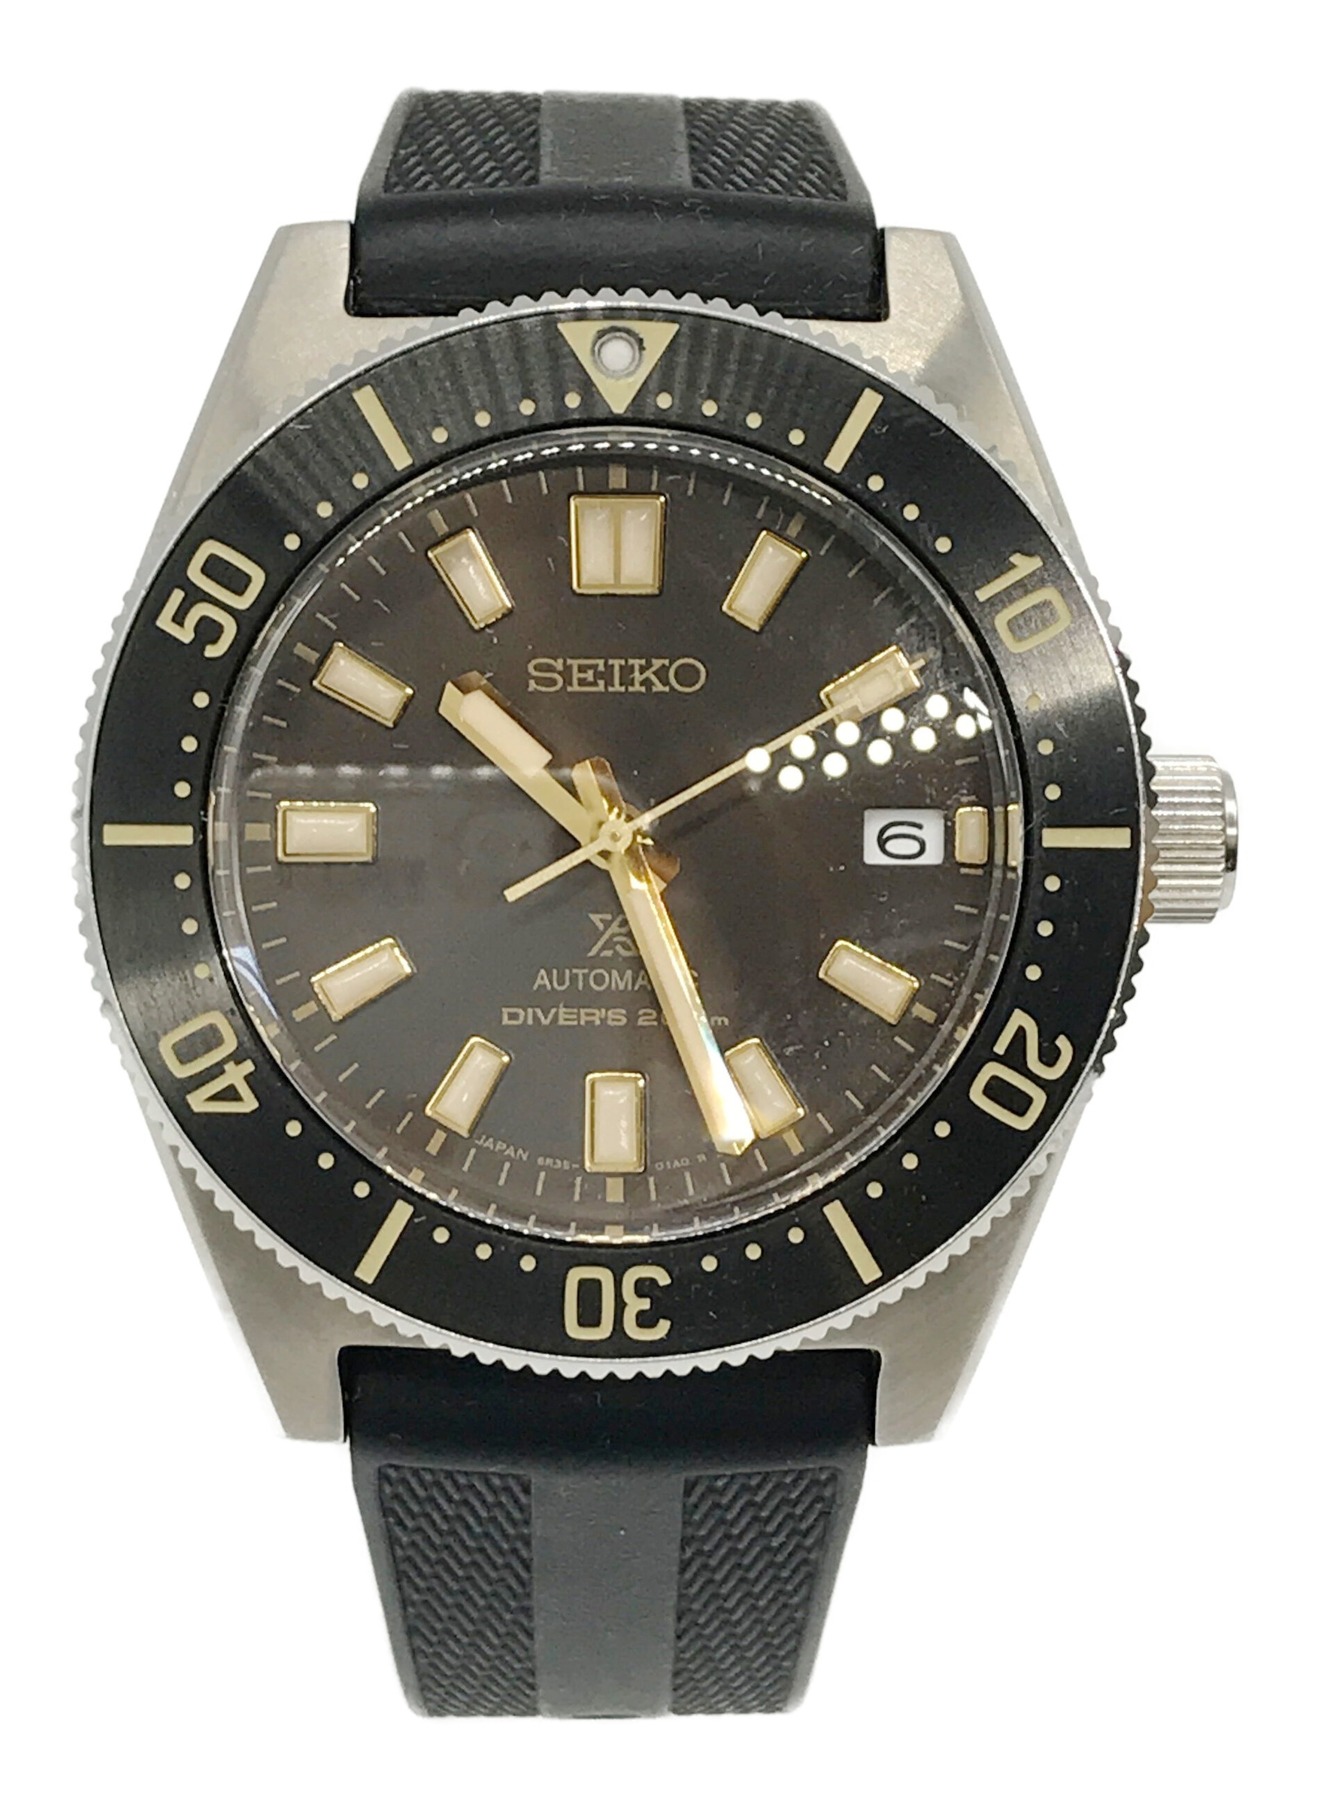 SEIKO (セイコー) 腕時計 ブラック サイズ:下記参照